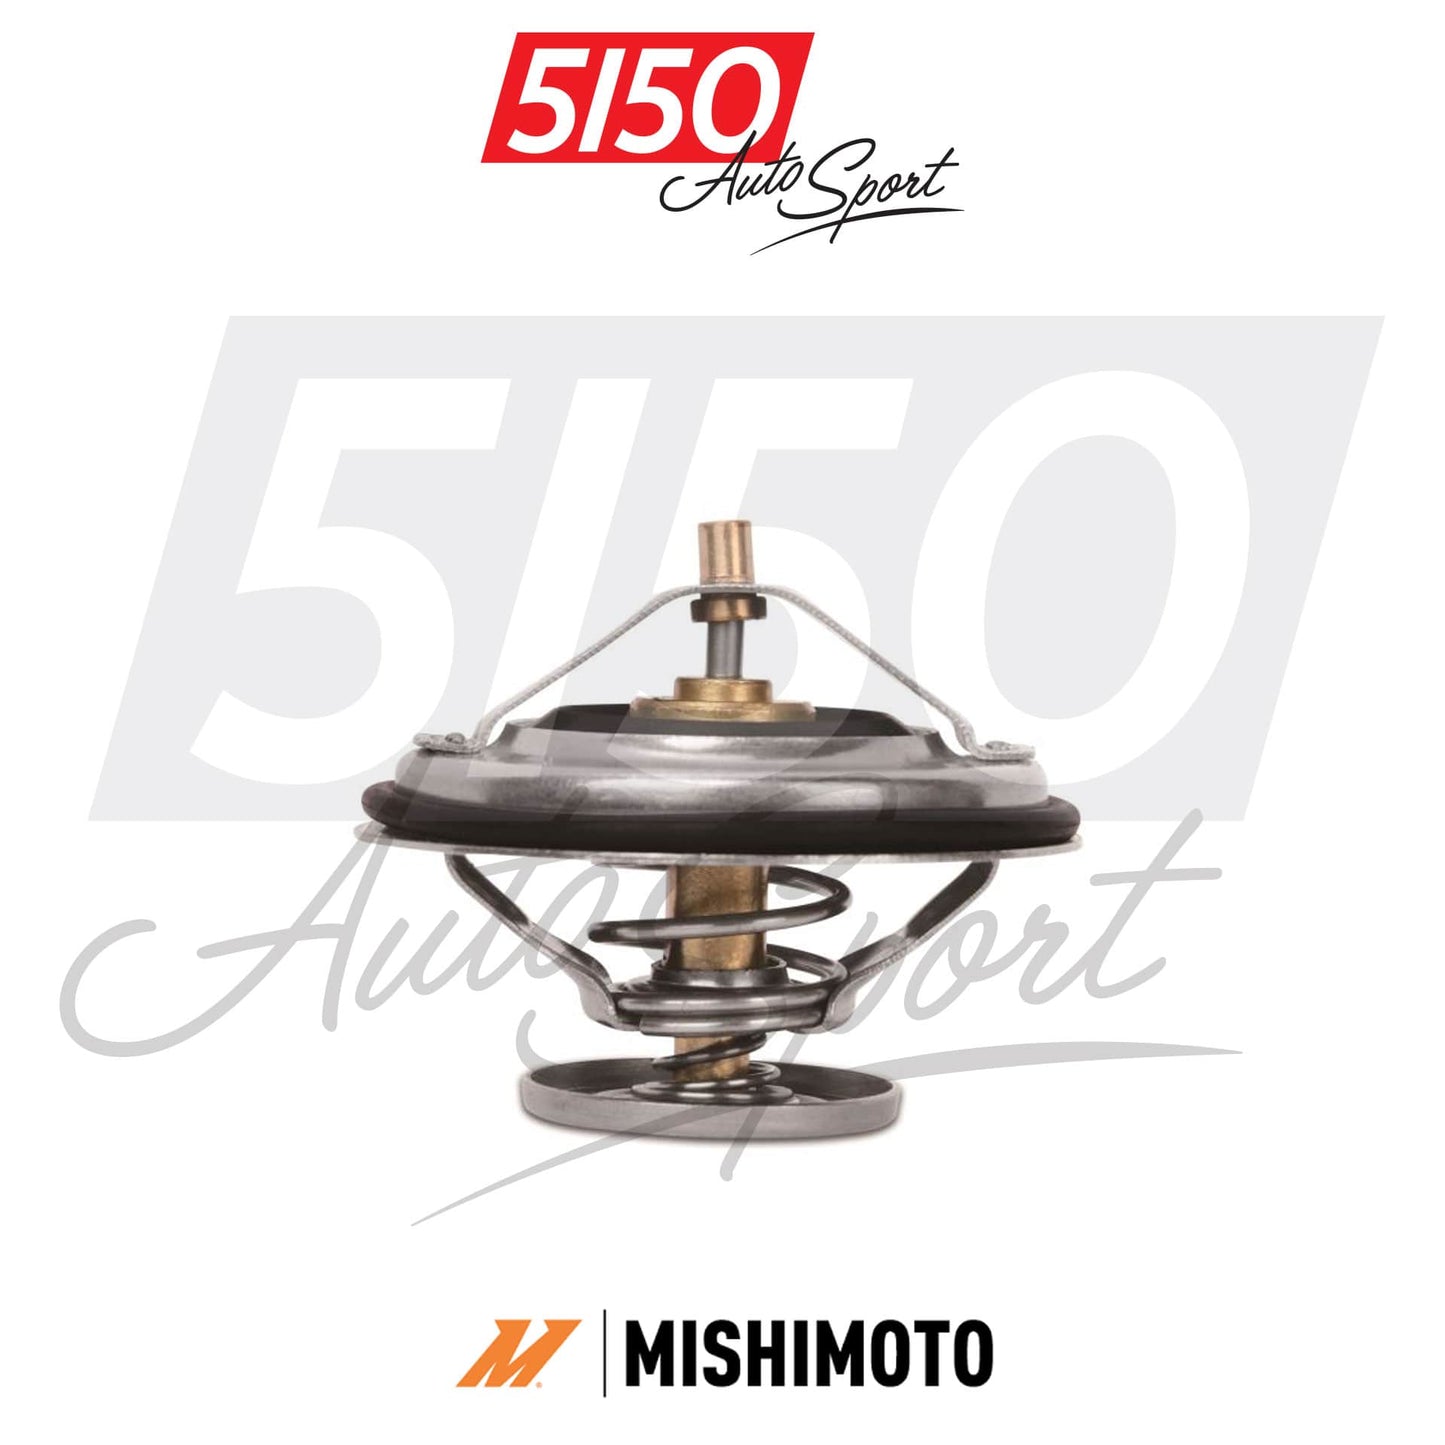 Mishimoto Racing Thermostat, BMW E36